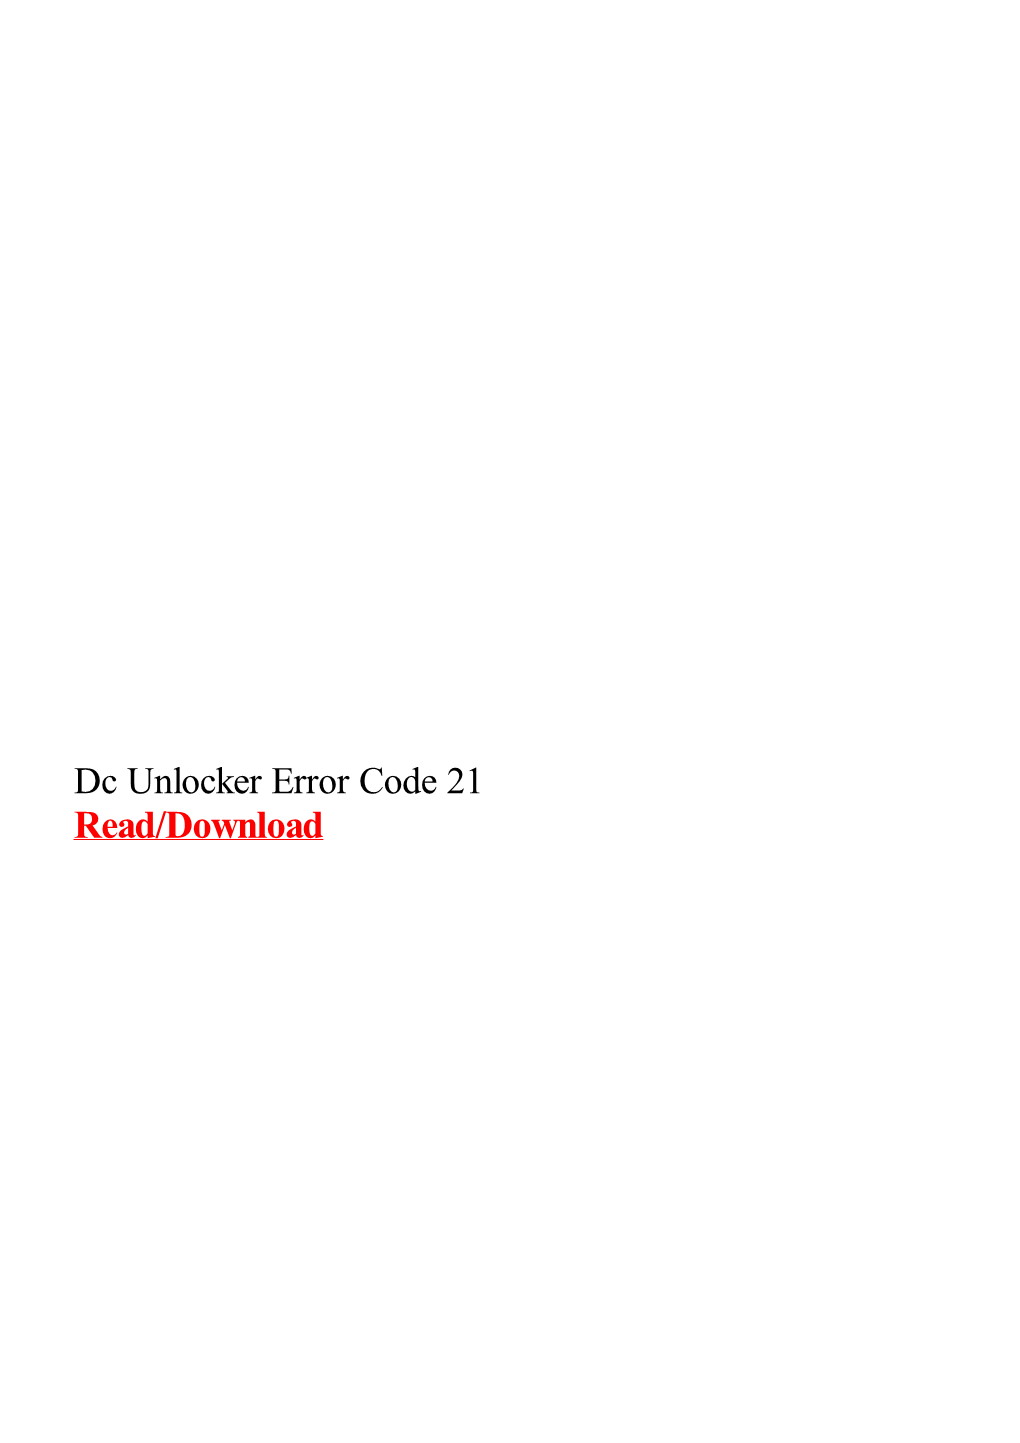 Dc Unlocker Error Code 21